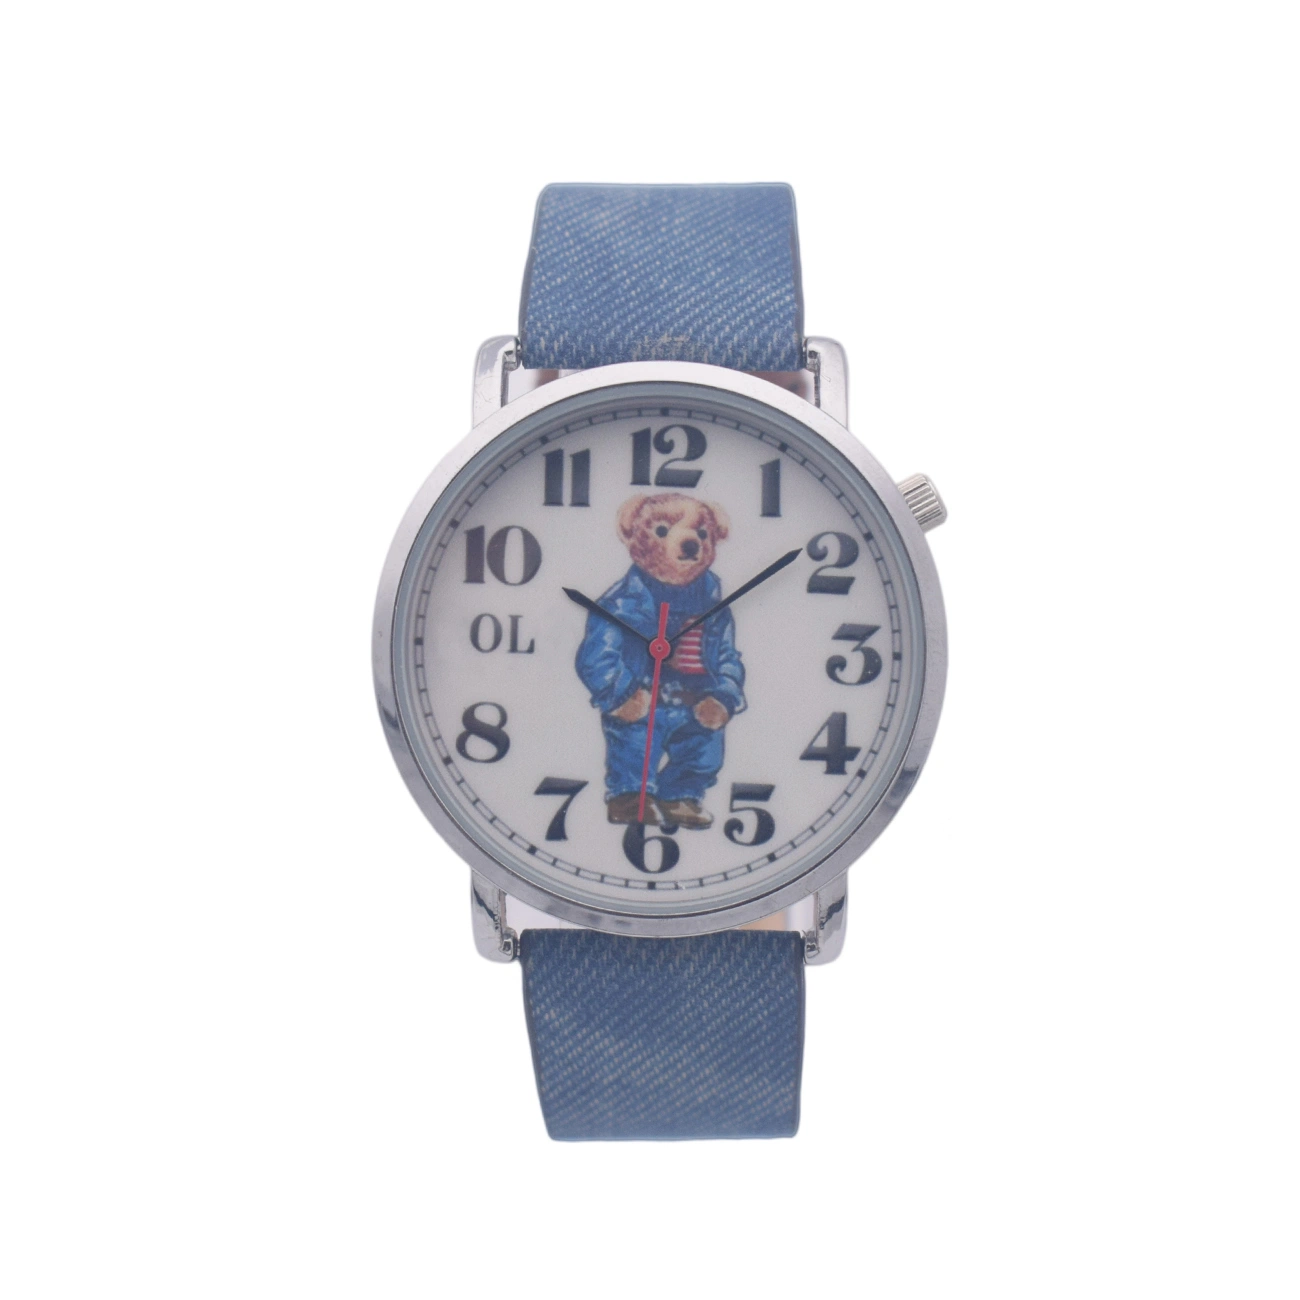 Arabic Numerals Unisex Leather Watch Gift Fashion Watch